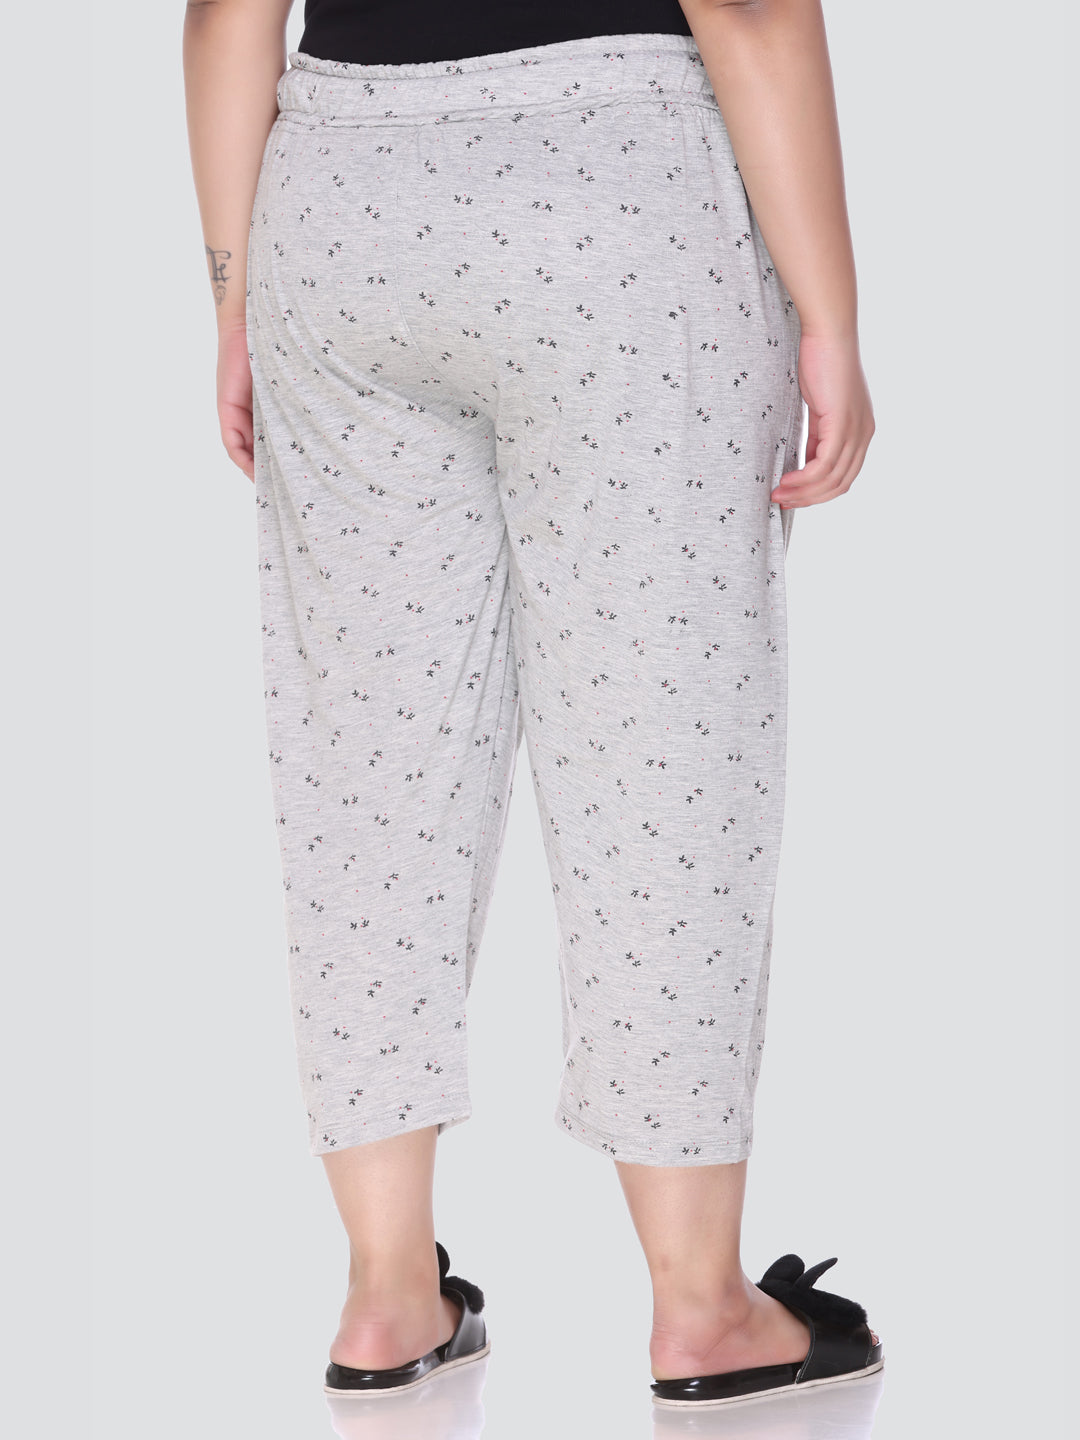 Women's Capri Pajama Pants Lace Trim Cotton Stretchy Comfy Sleepwear Bottoms  Casual Wide Leg Lounge Sleep Pants (Black, S) at Amazon Women's Clothing  store